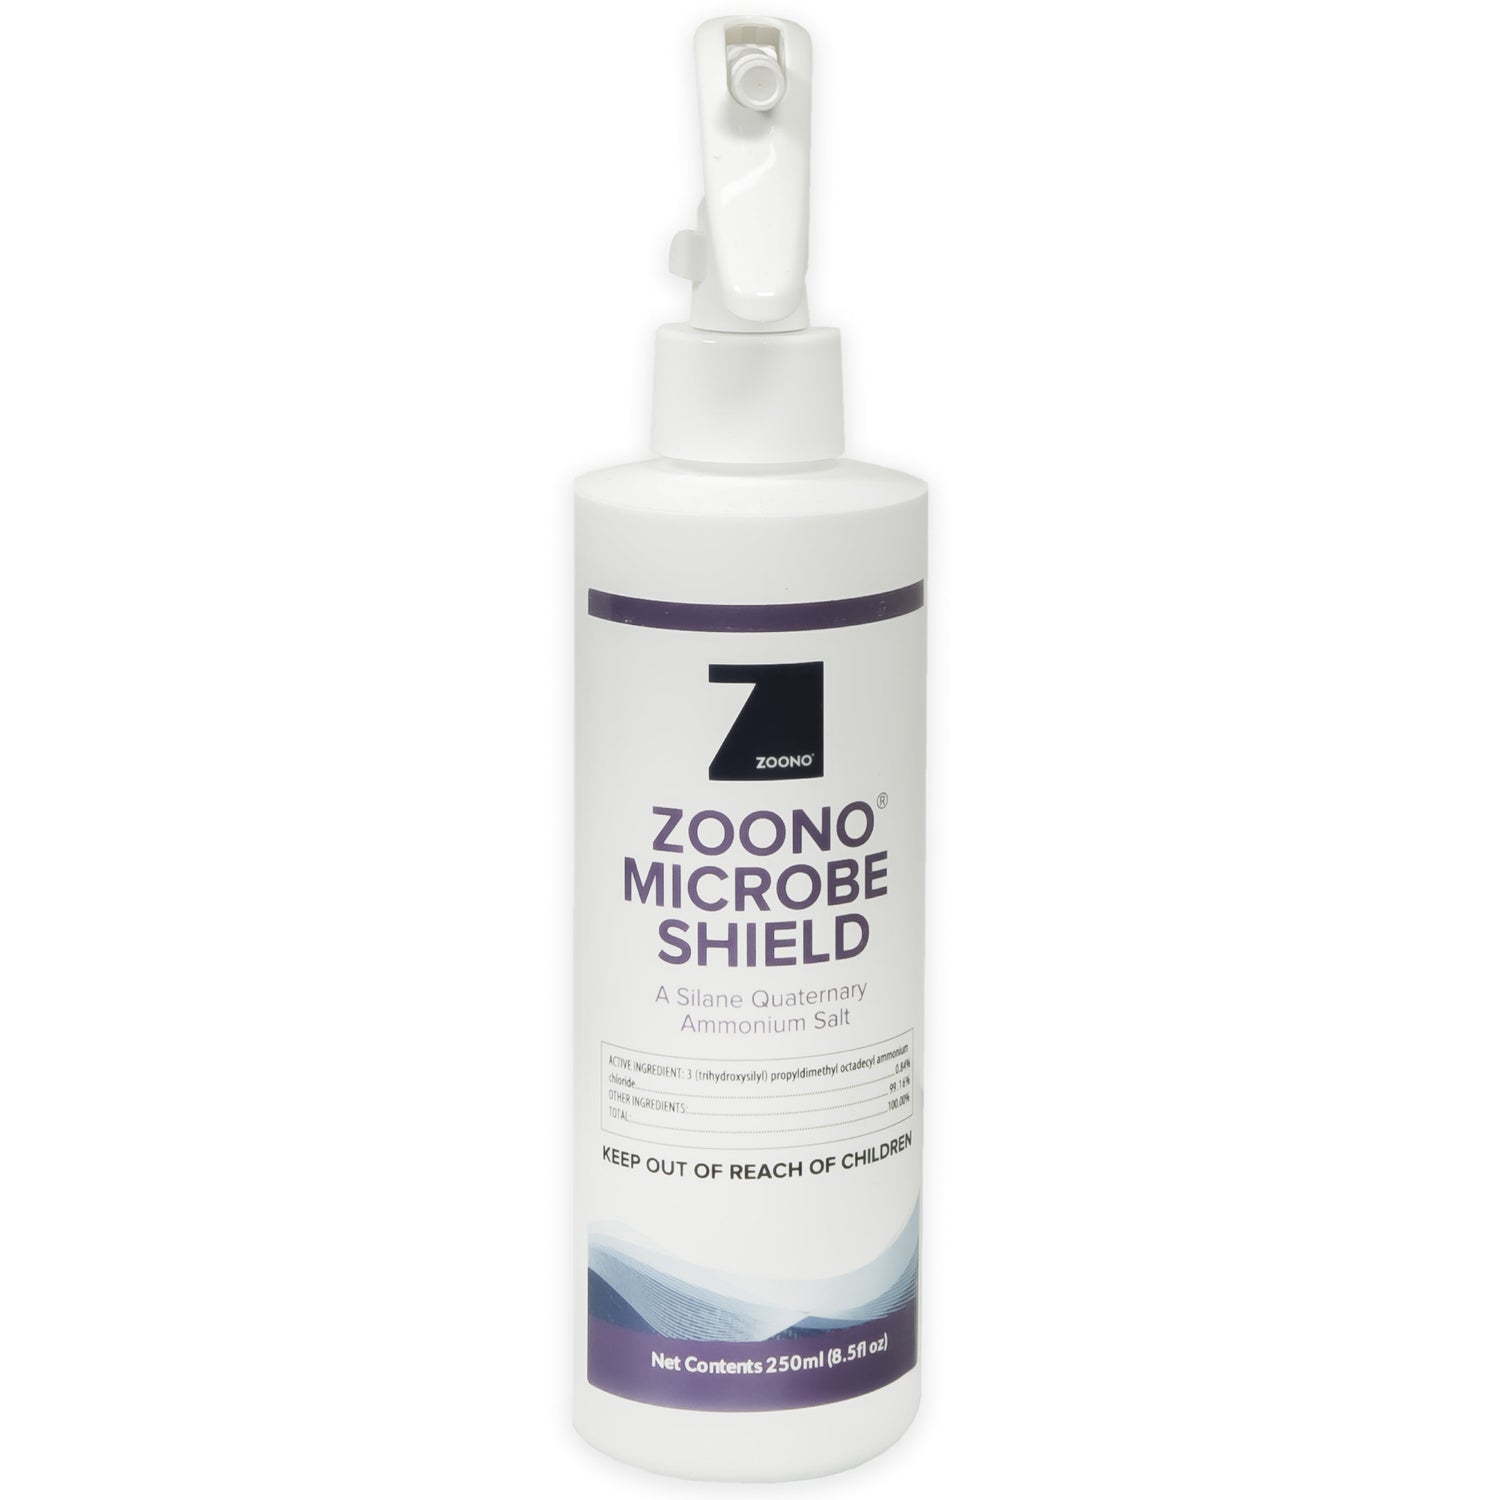 Zoono Microbe Shield Antimicrobial Spray